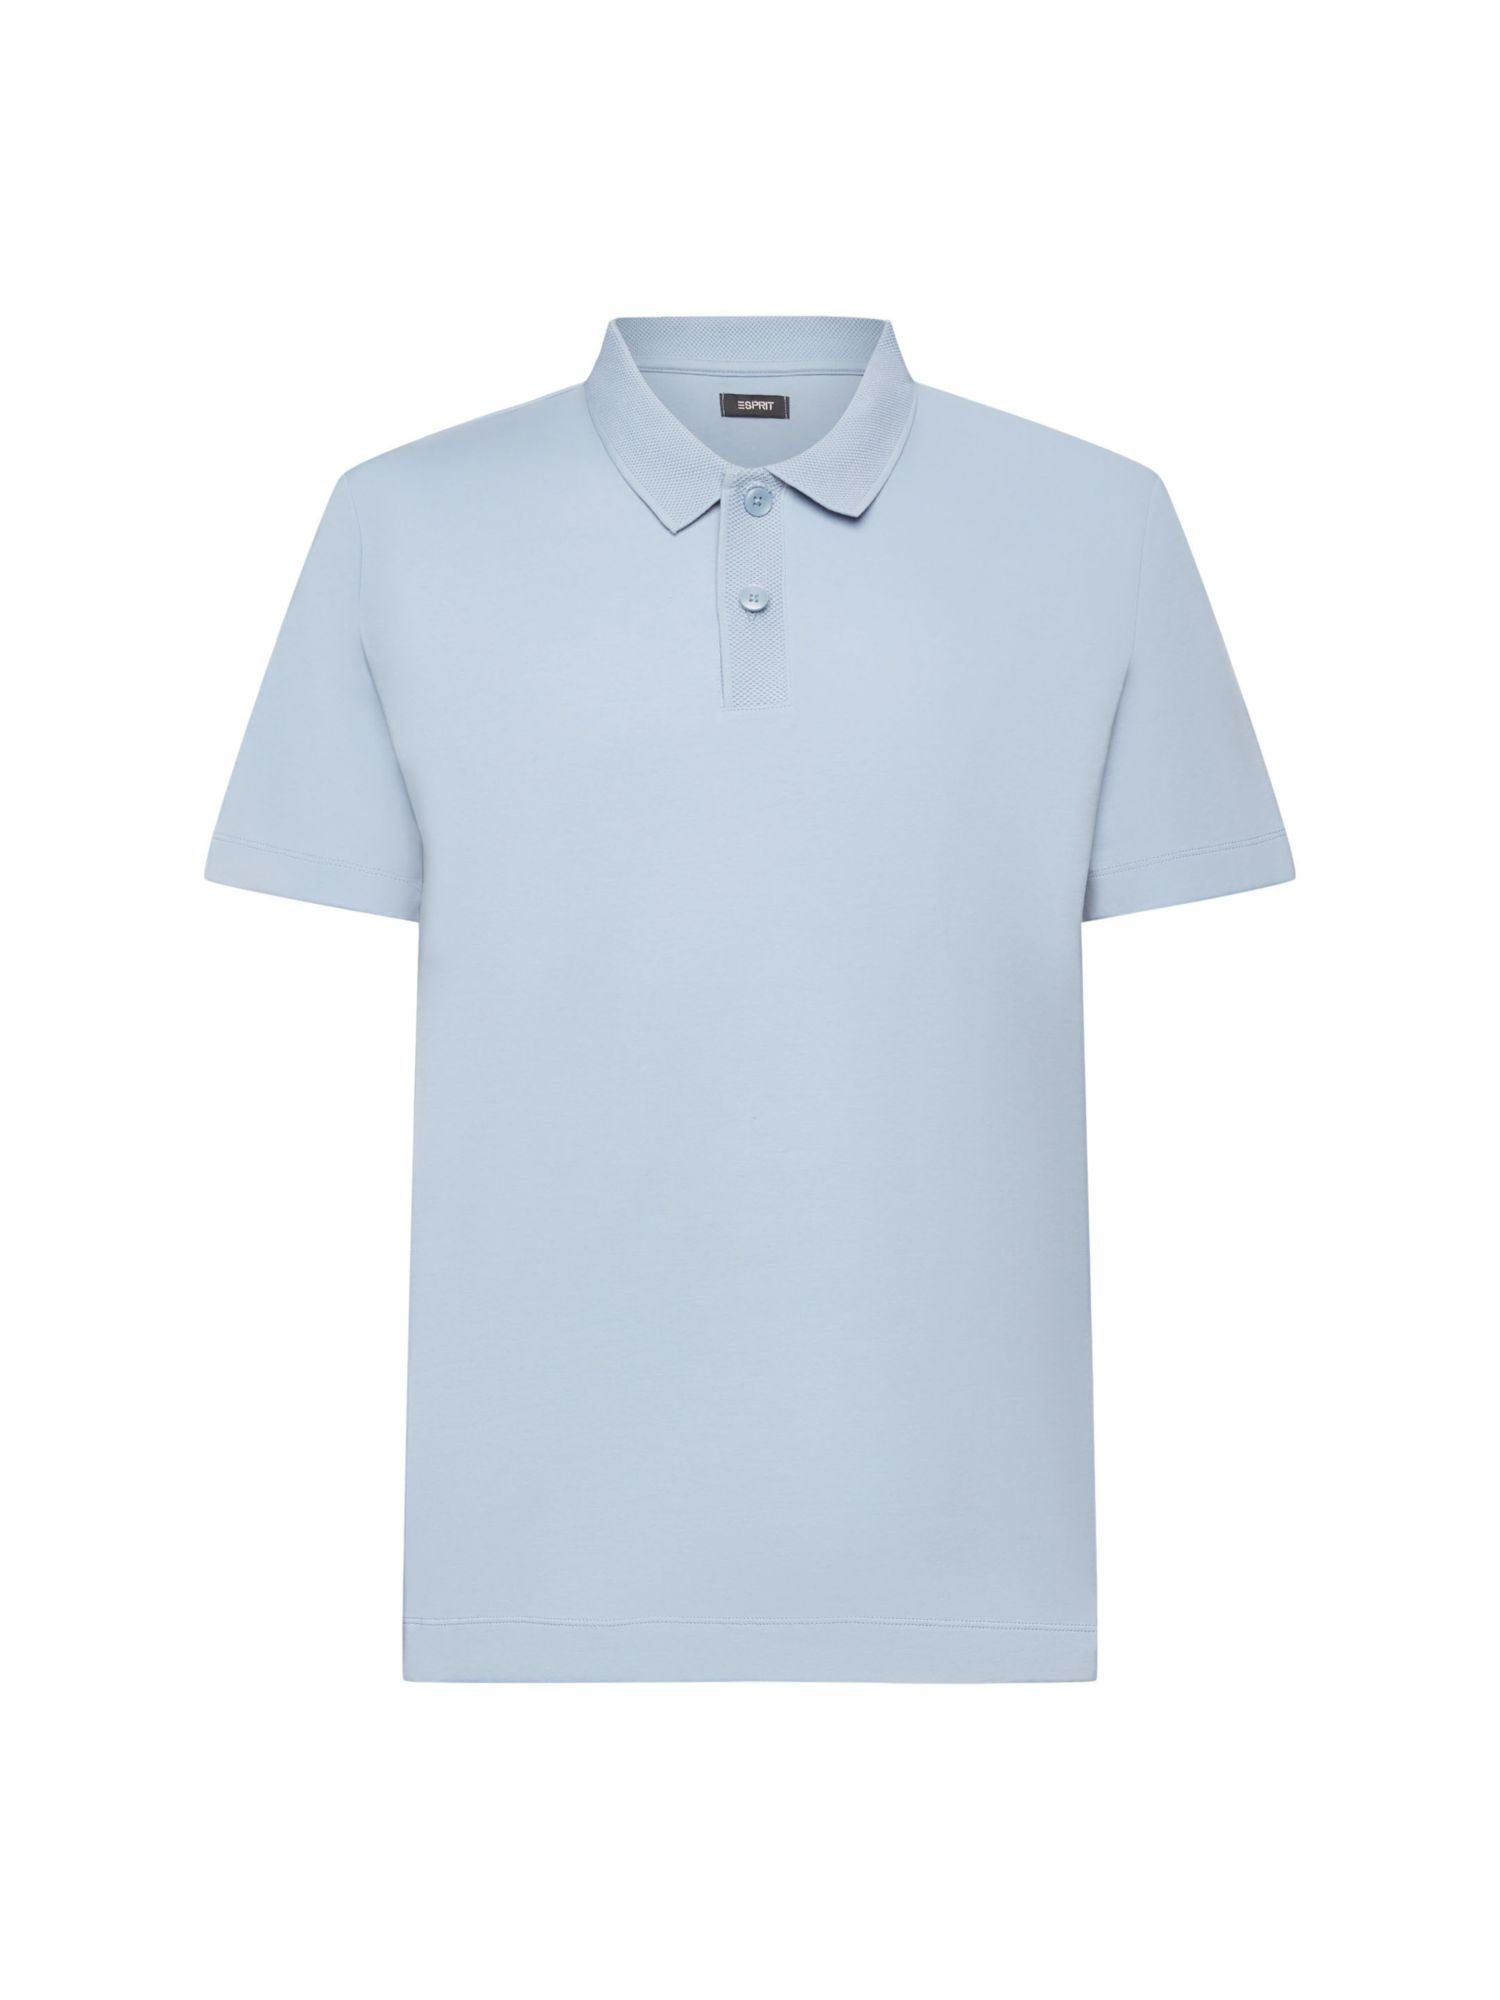 Esprit Collection Poloshirt Poloshirt aus Pima-Baumwolle LIGHT BLUE LAVENDER